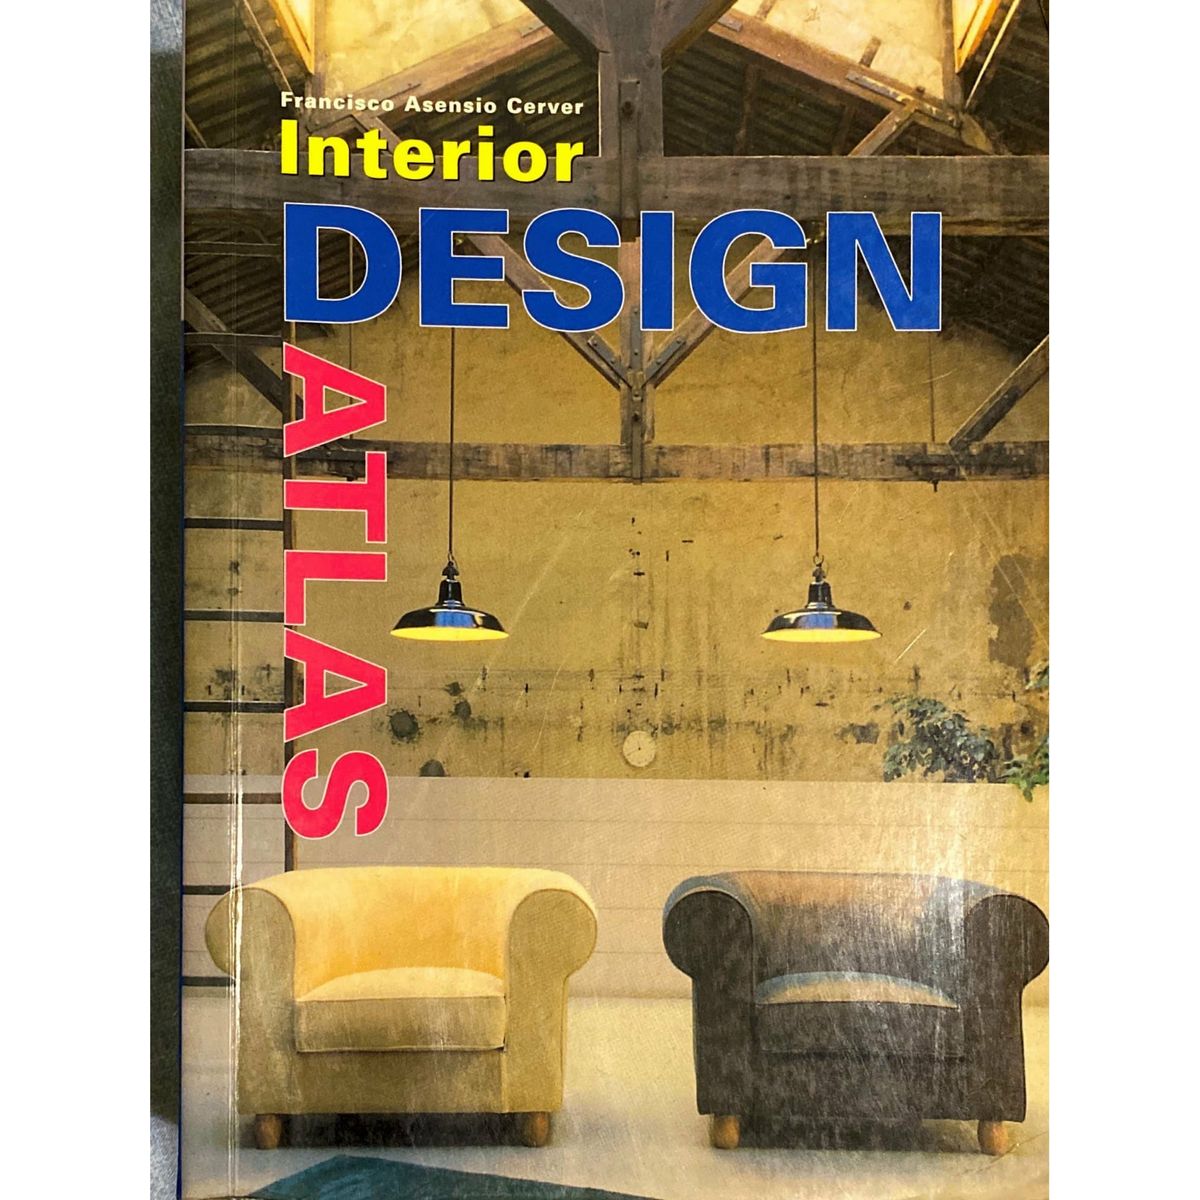 ISBN: 9783833117060 / 0383311706 - Interior Design Atlas by Francisco Asensio Cerver [2005]